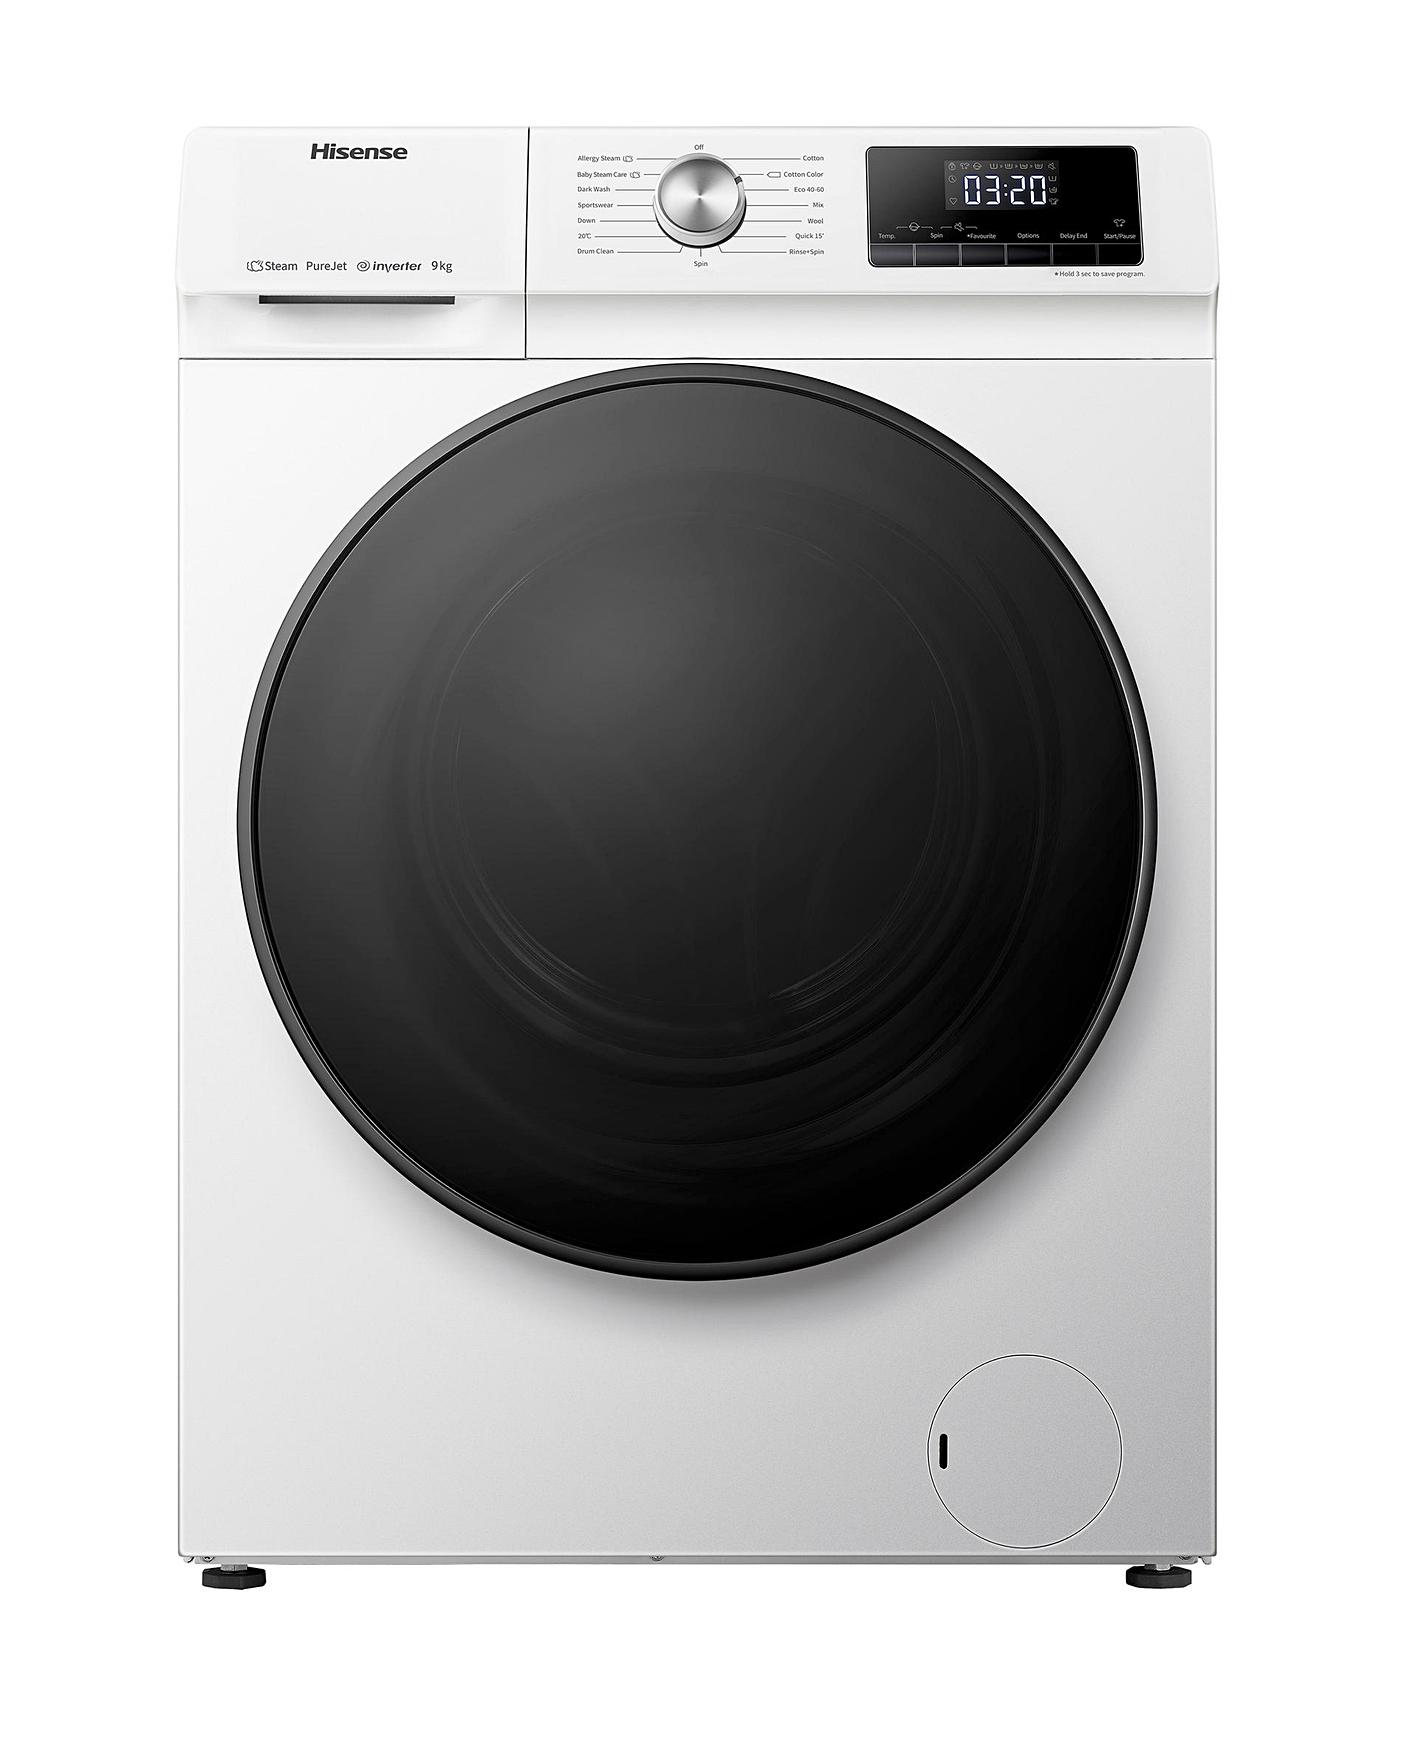 Hisense WFQA9014EVJM 9kg Washing Machine Man | Premier